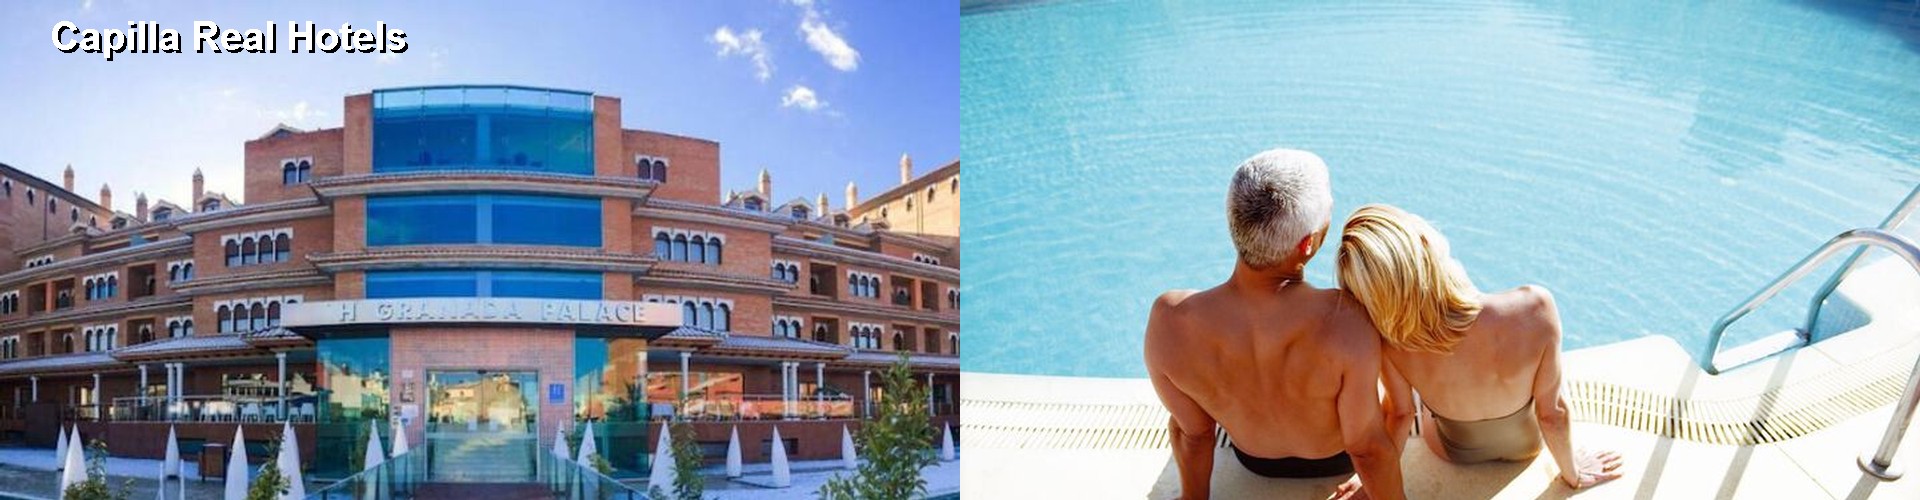 5 Best Hotels near Capilla Real